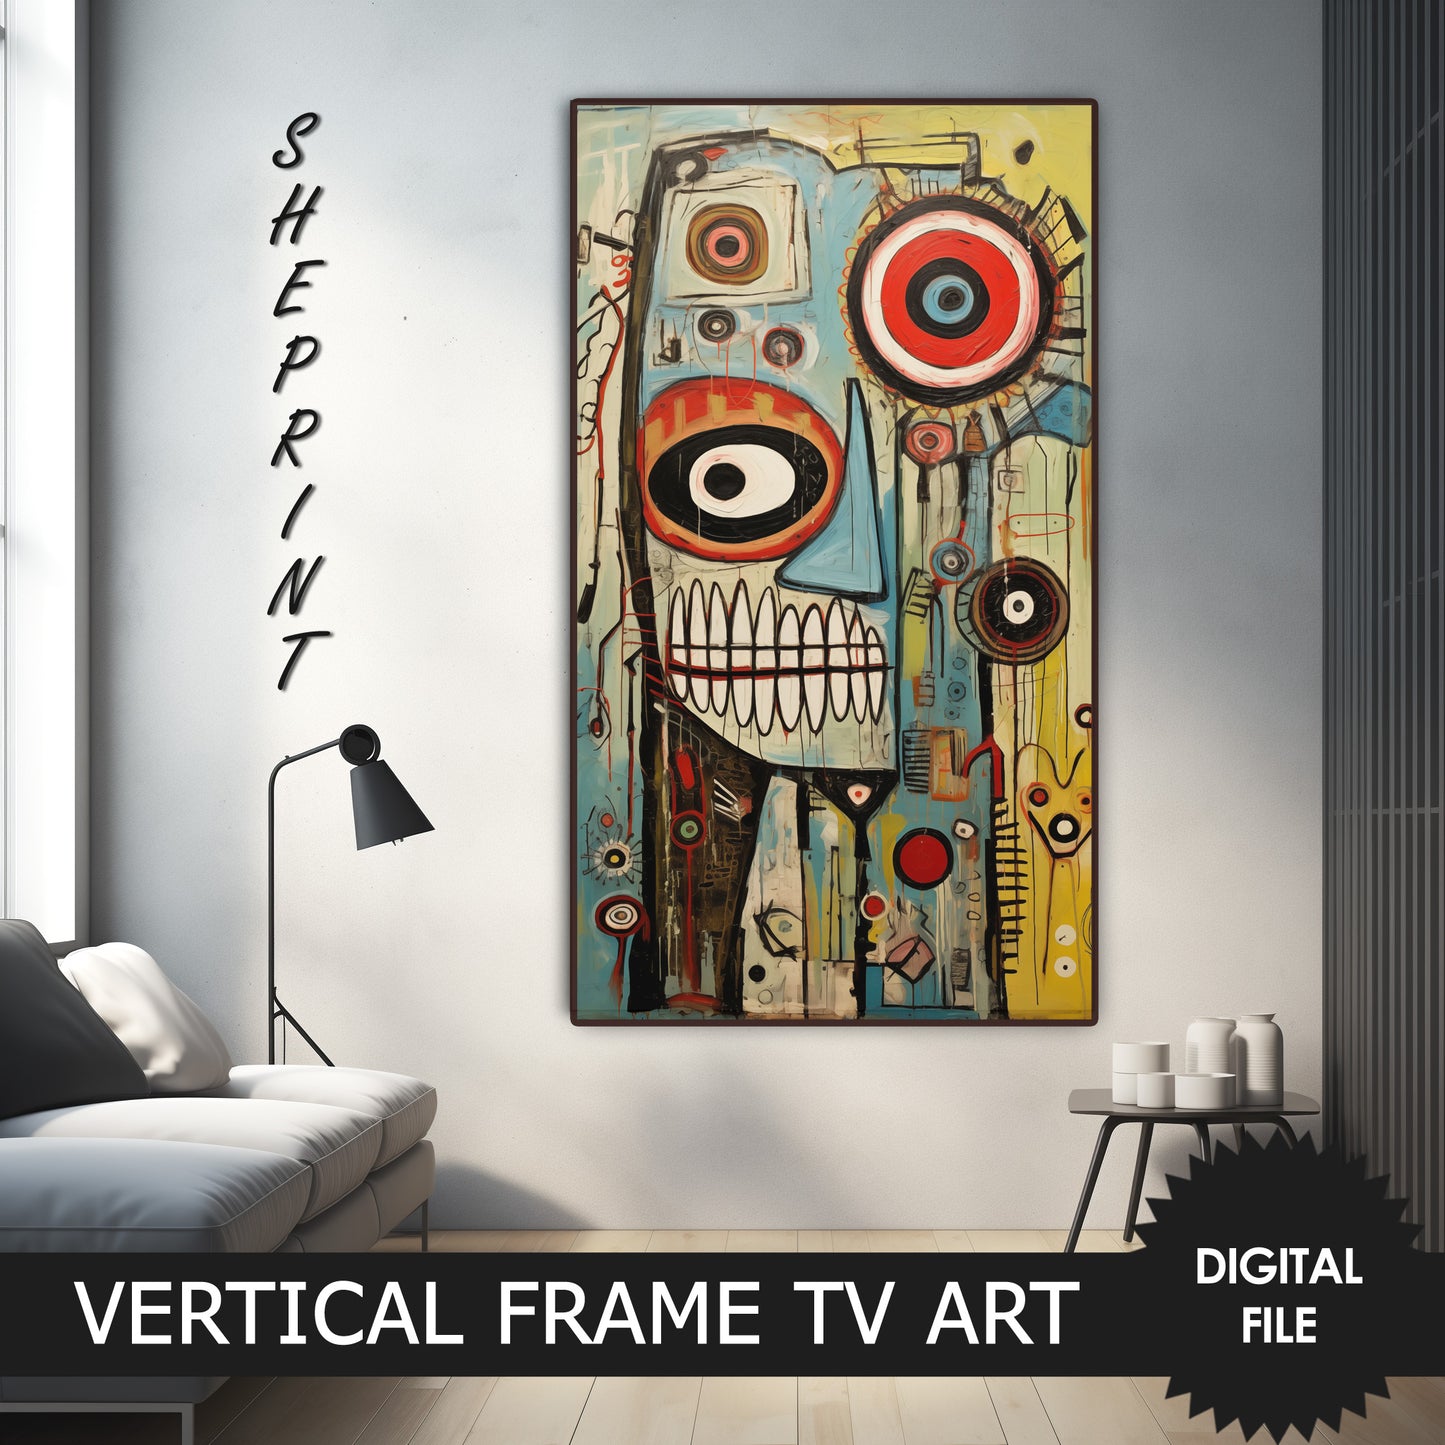 Vertical Frame TV Art, Faces Art Brut Oil Painting, Outsider Art preview on Samsung Frame TV when mounted vertically